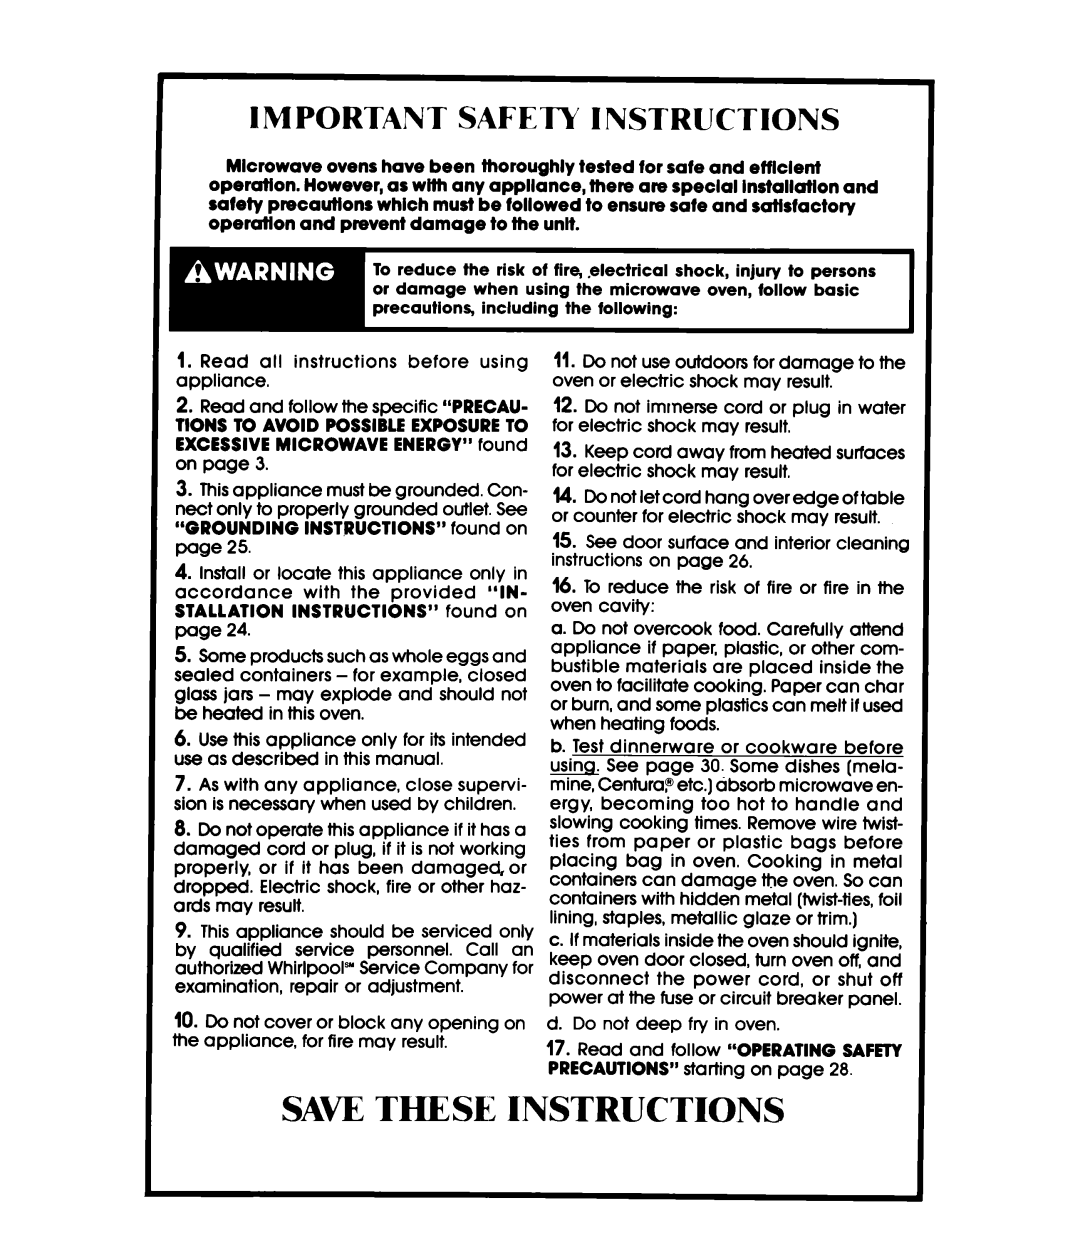 Whirlpool MW3601XW, MW3600XW manual Saw These Instructions, Important Safety Instructions 